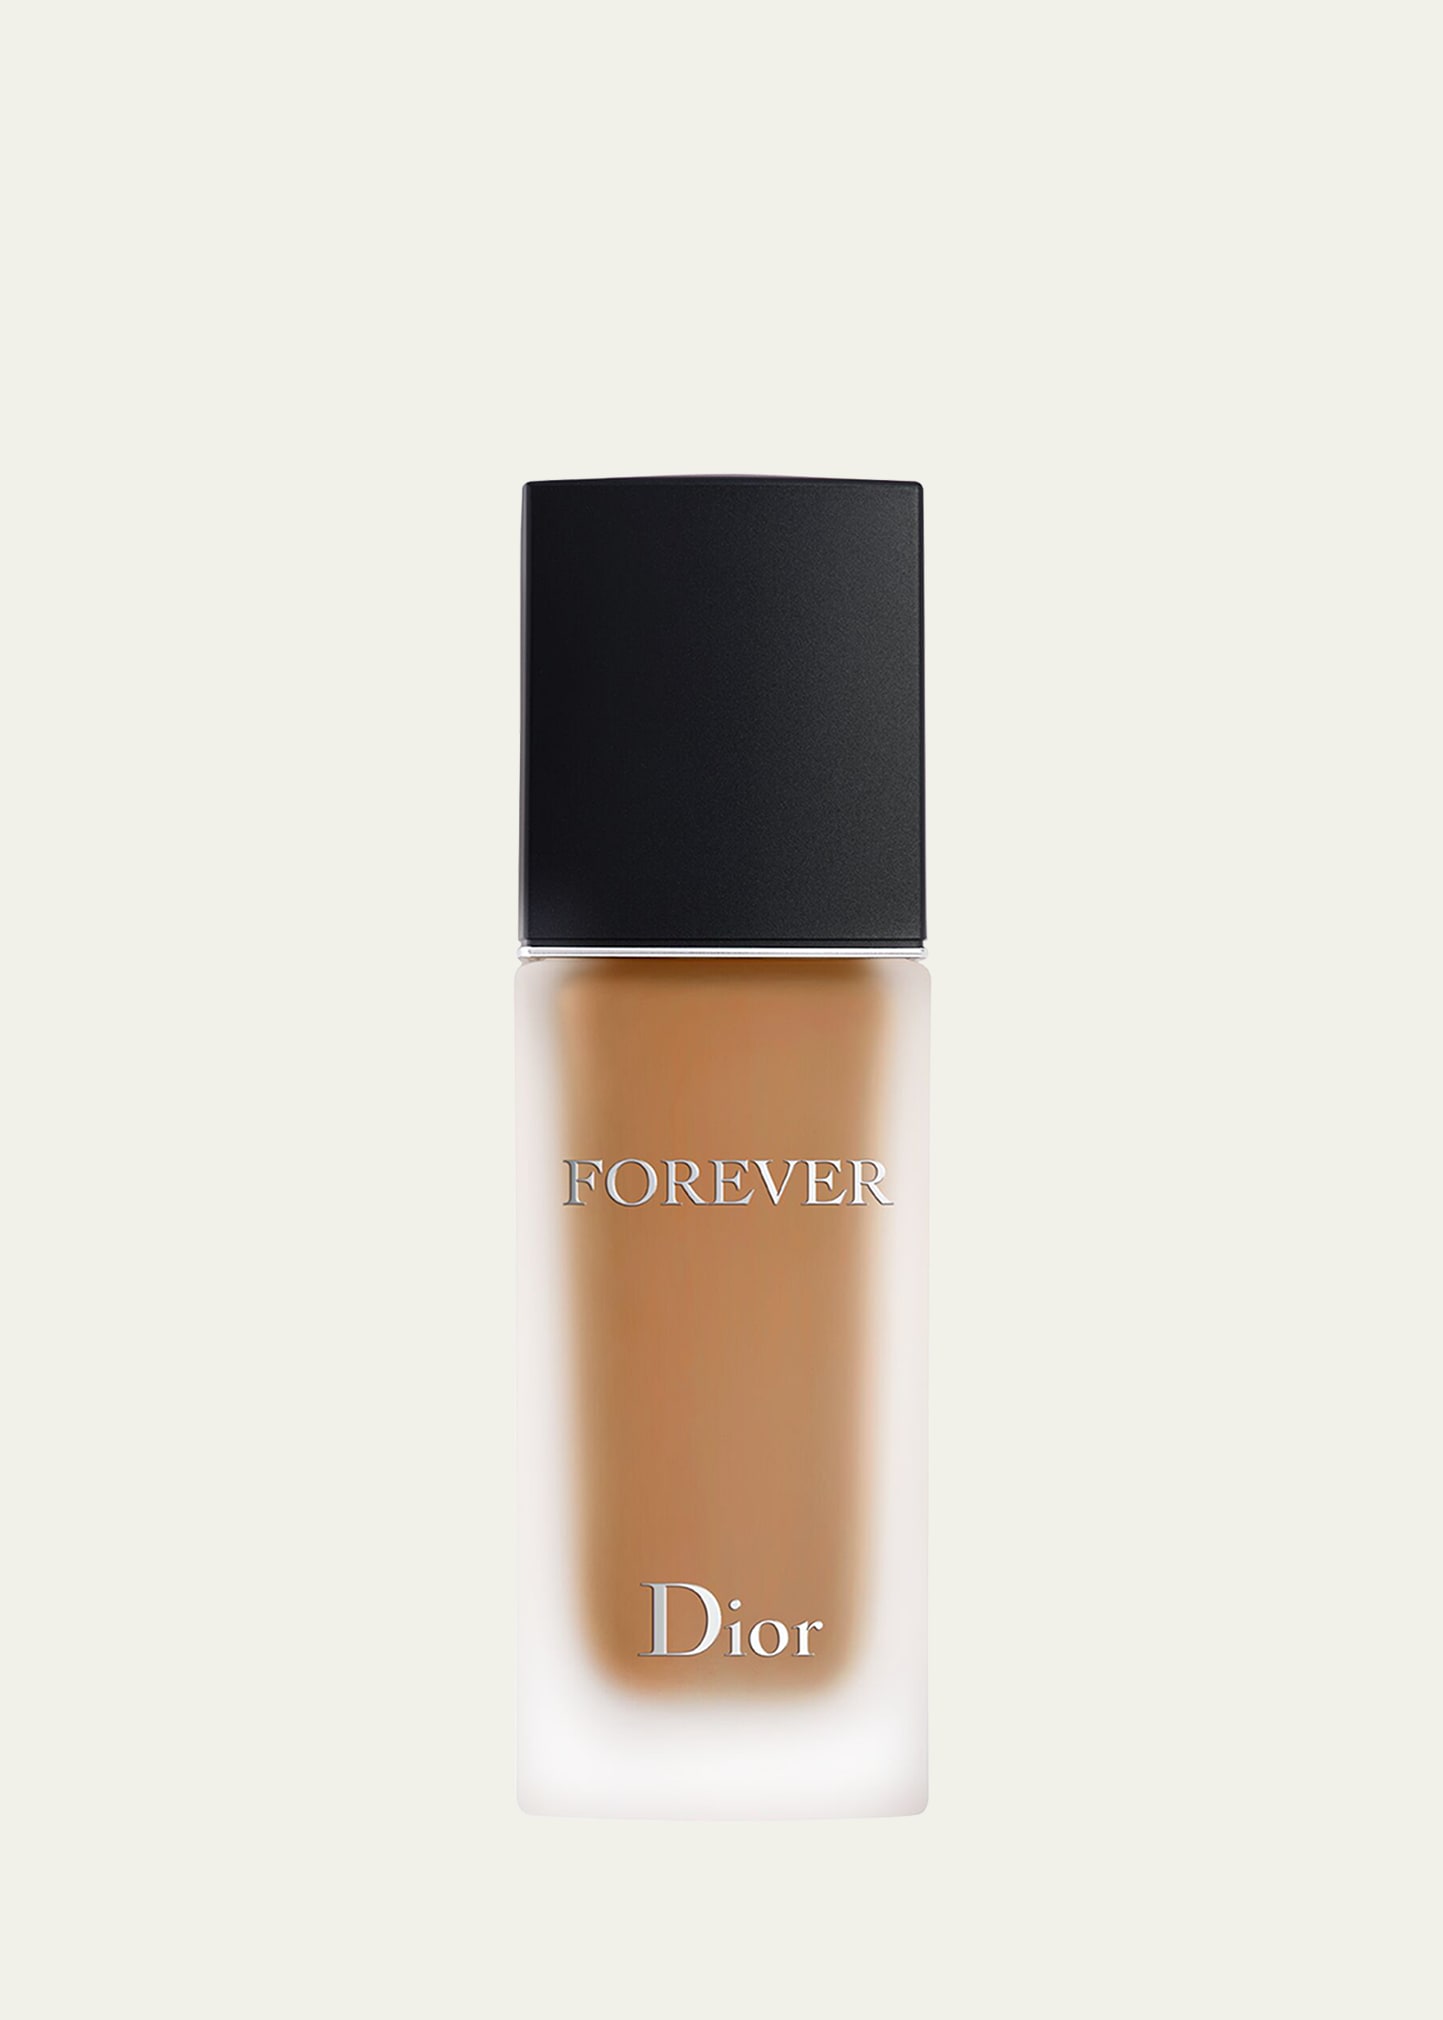 Dior 1 Oz. Forever Matte Skincare Foundation Spf 15 In 5 Warm